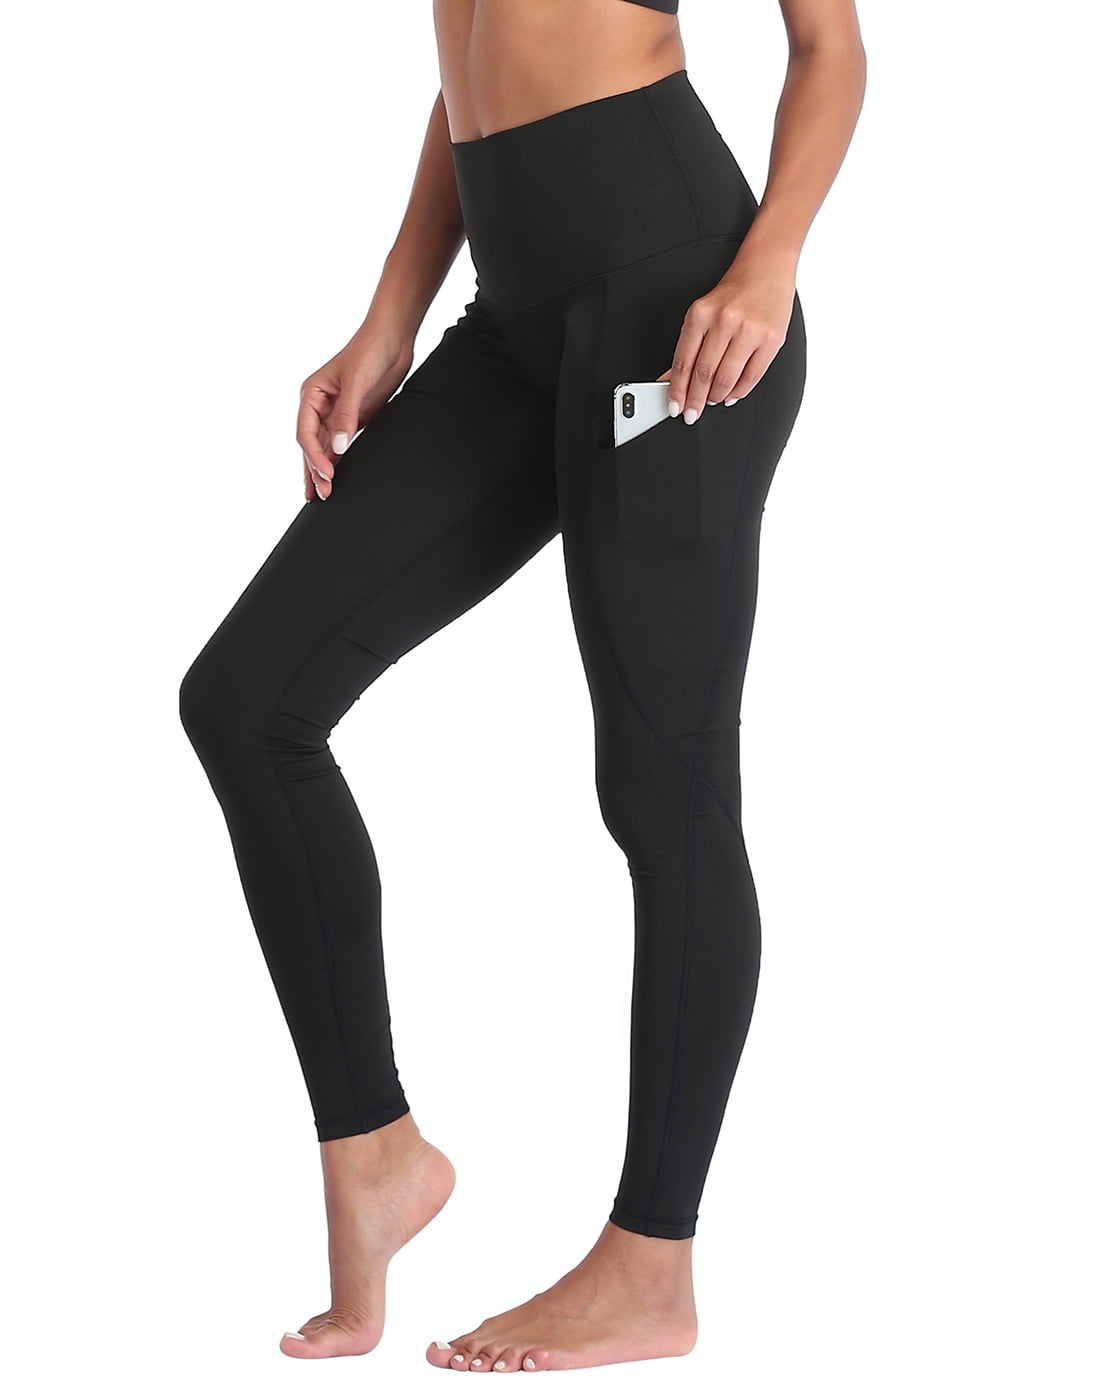 AOOM Workout Leggings with Pockets for Women,High Waist Leggings Yoga Pants Full-Length